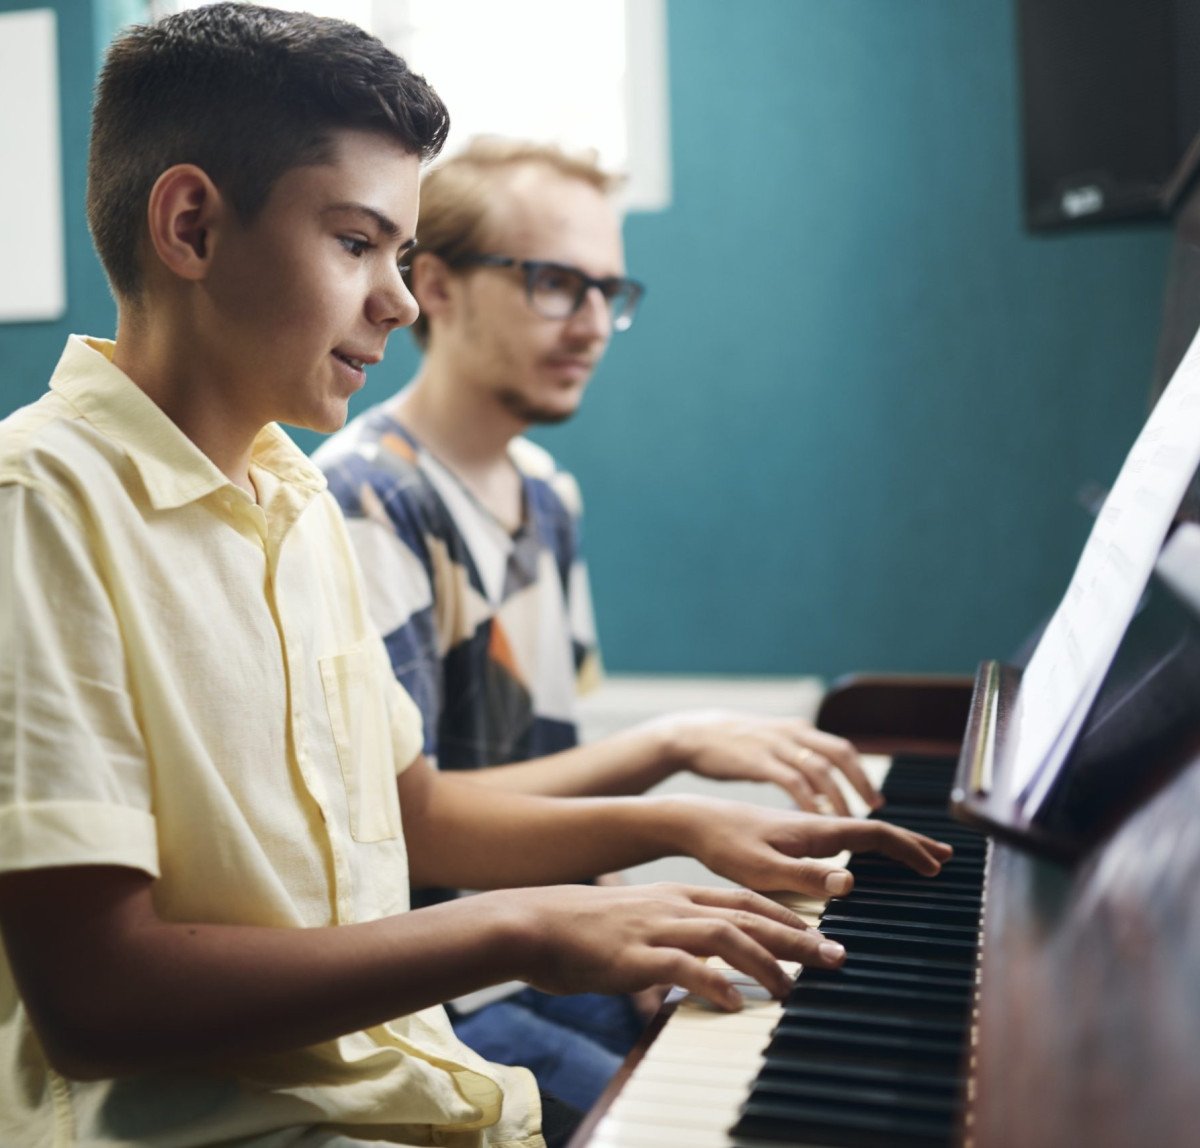 smiling-boy-playing-the-piano-with-his-teacher-2021-09-24-04-29-00-utc.jpg